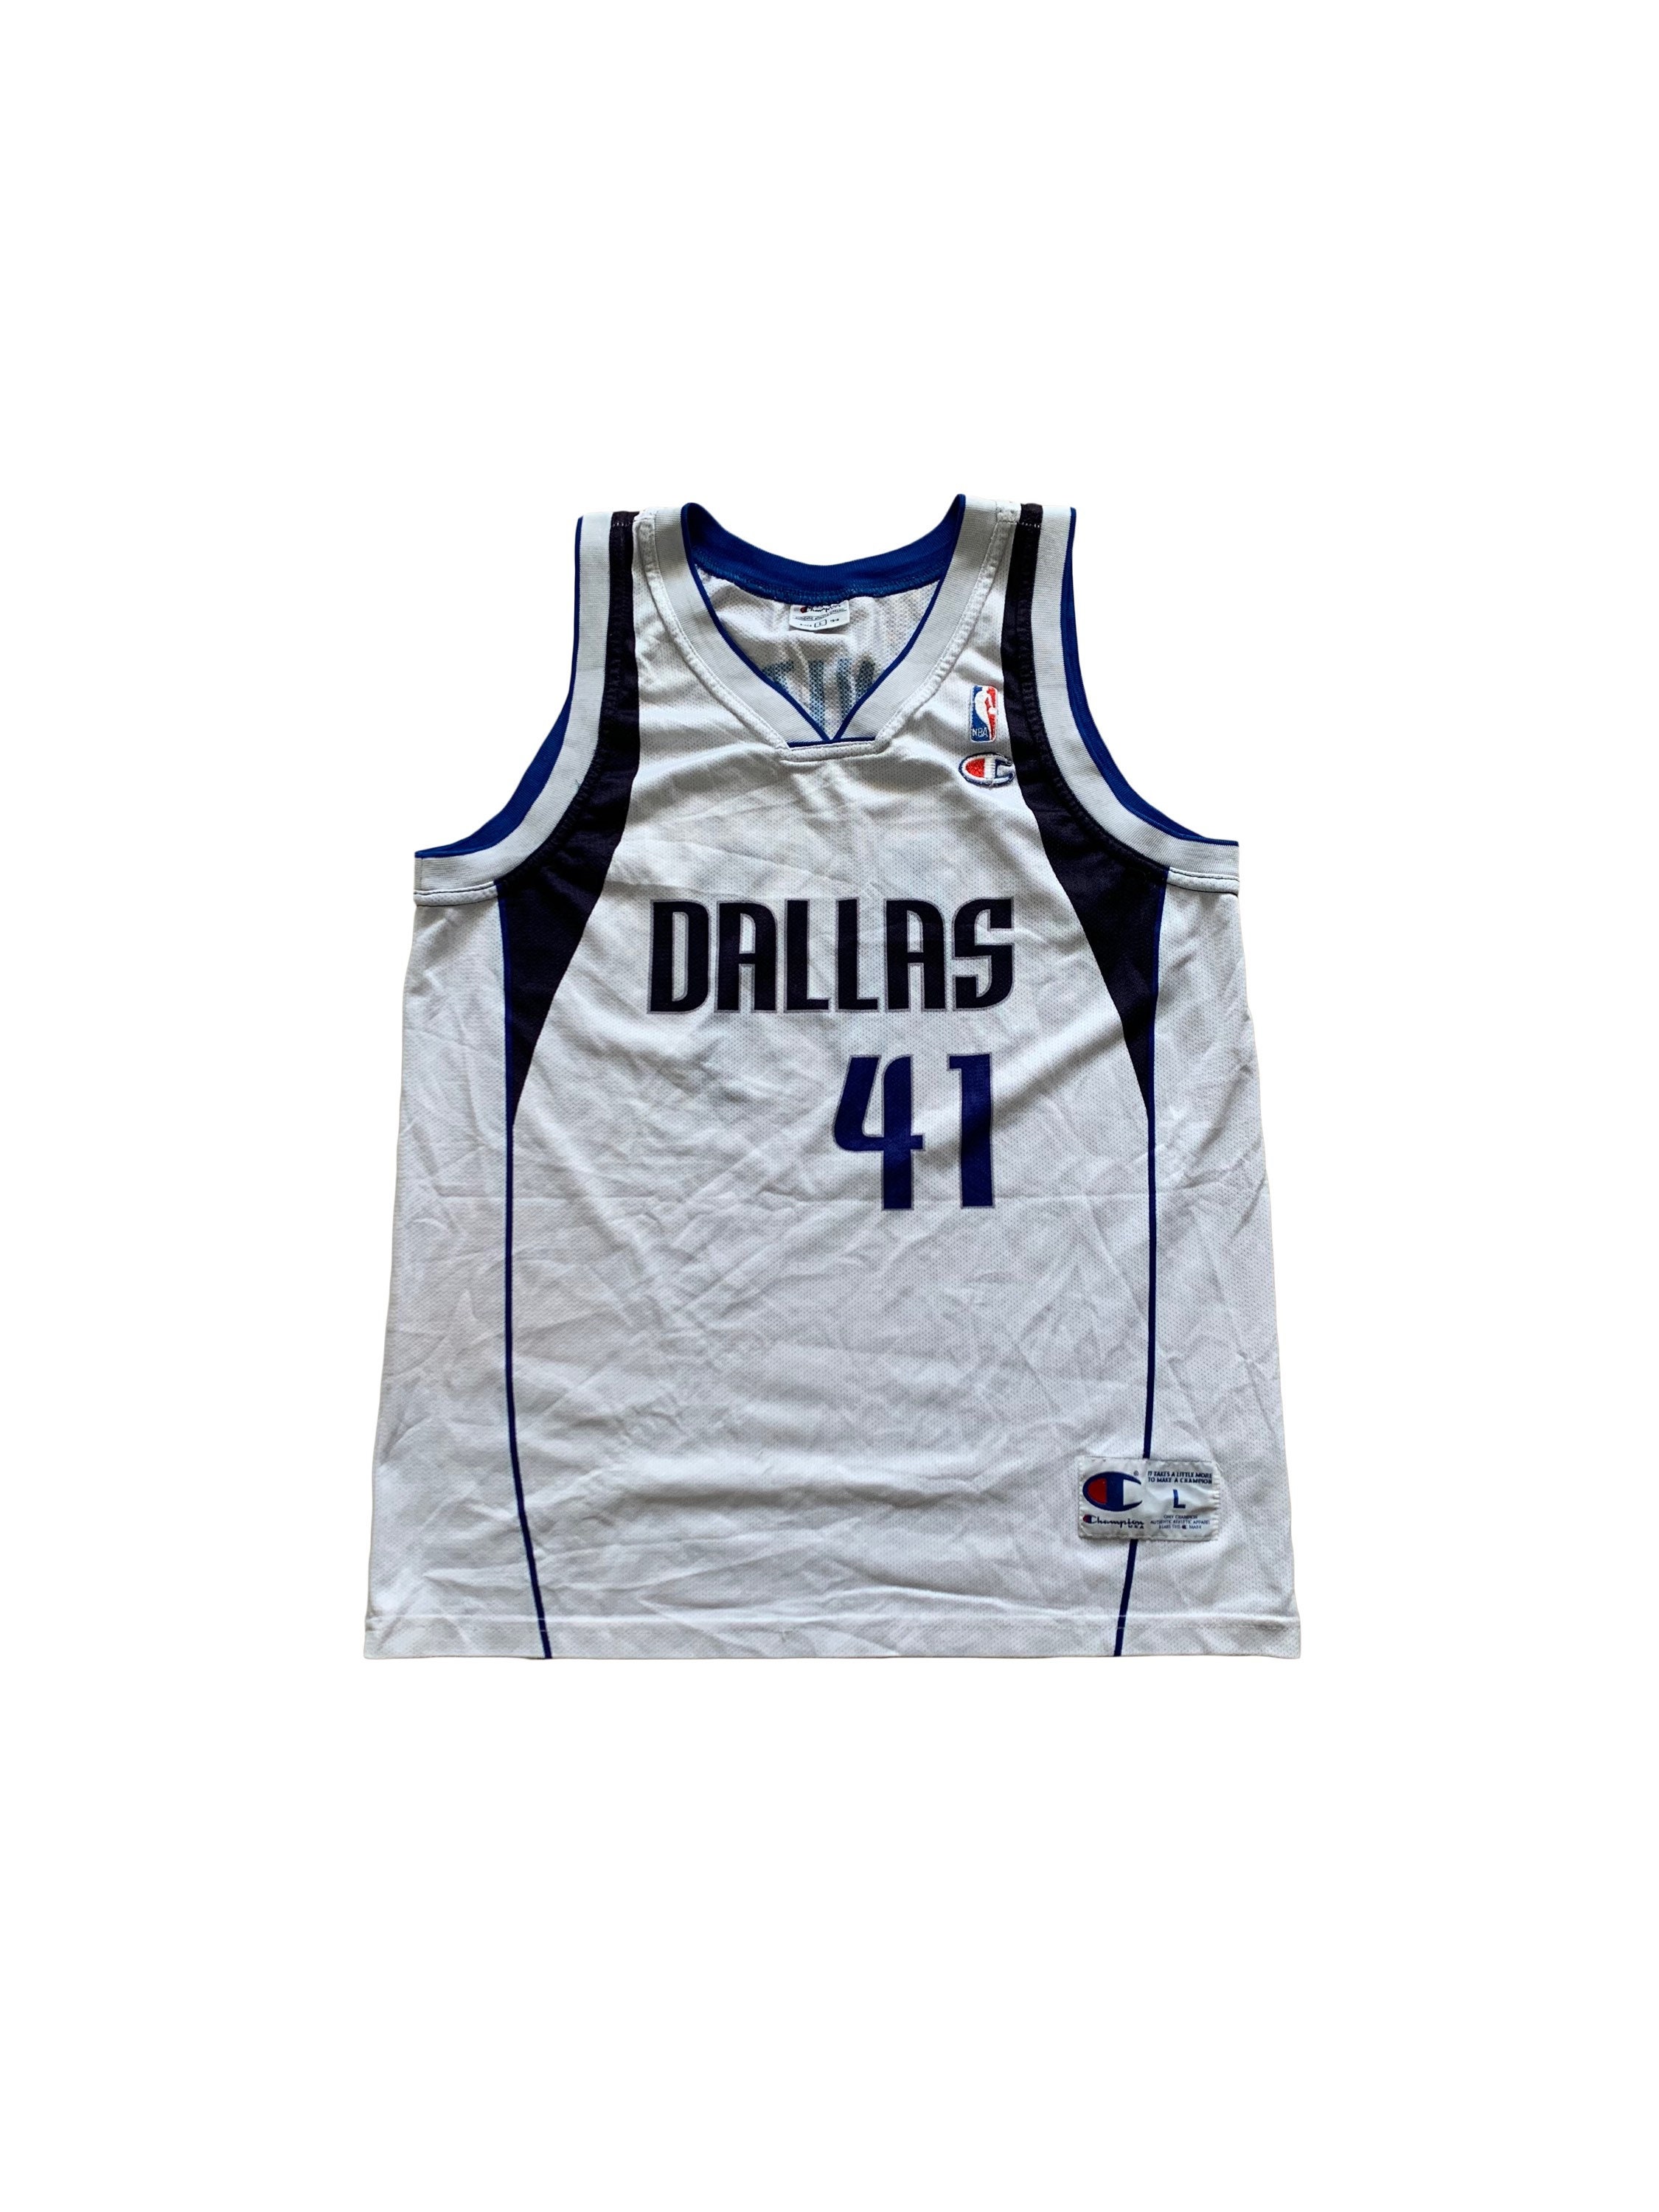 Buy VTG NBA Nike Rewind 87 Dallas Mavericks Dirk Nowitzki Jersey Online in  India 